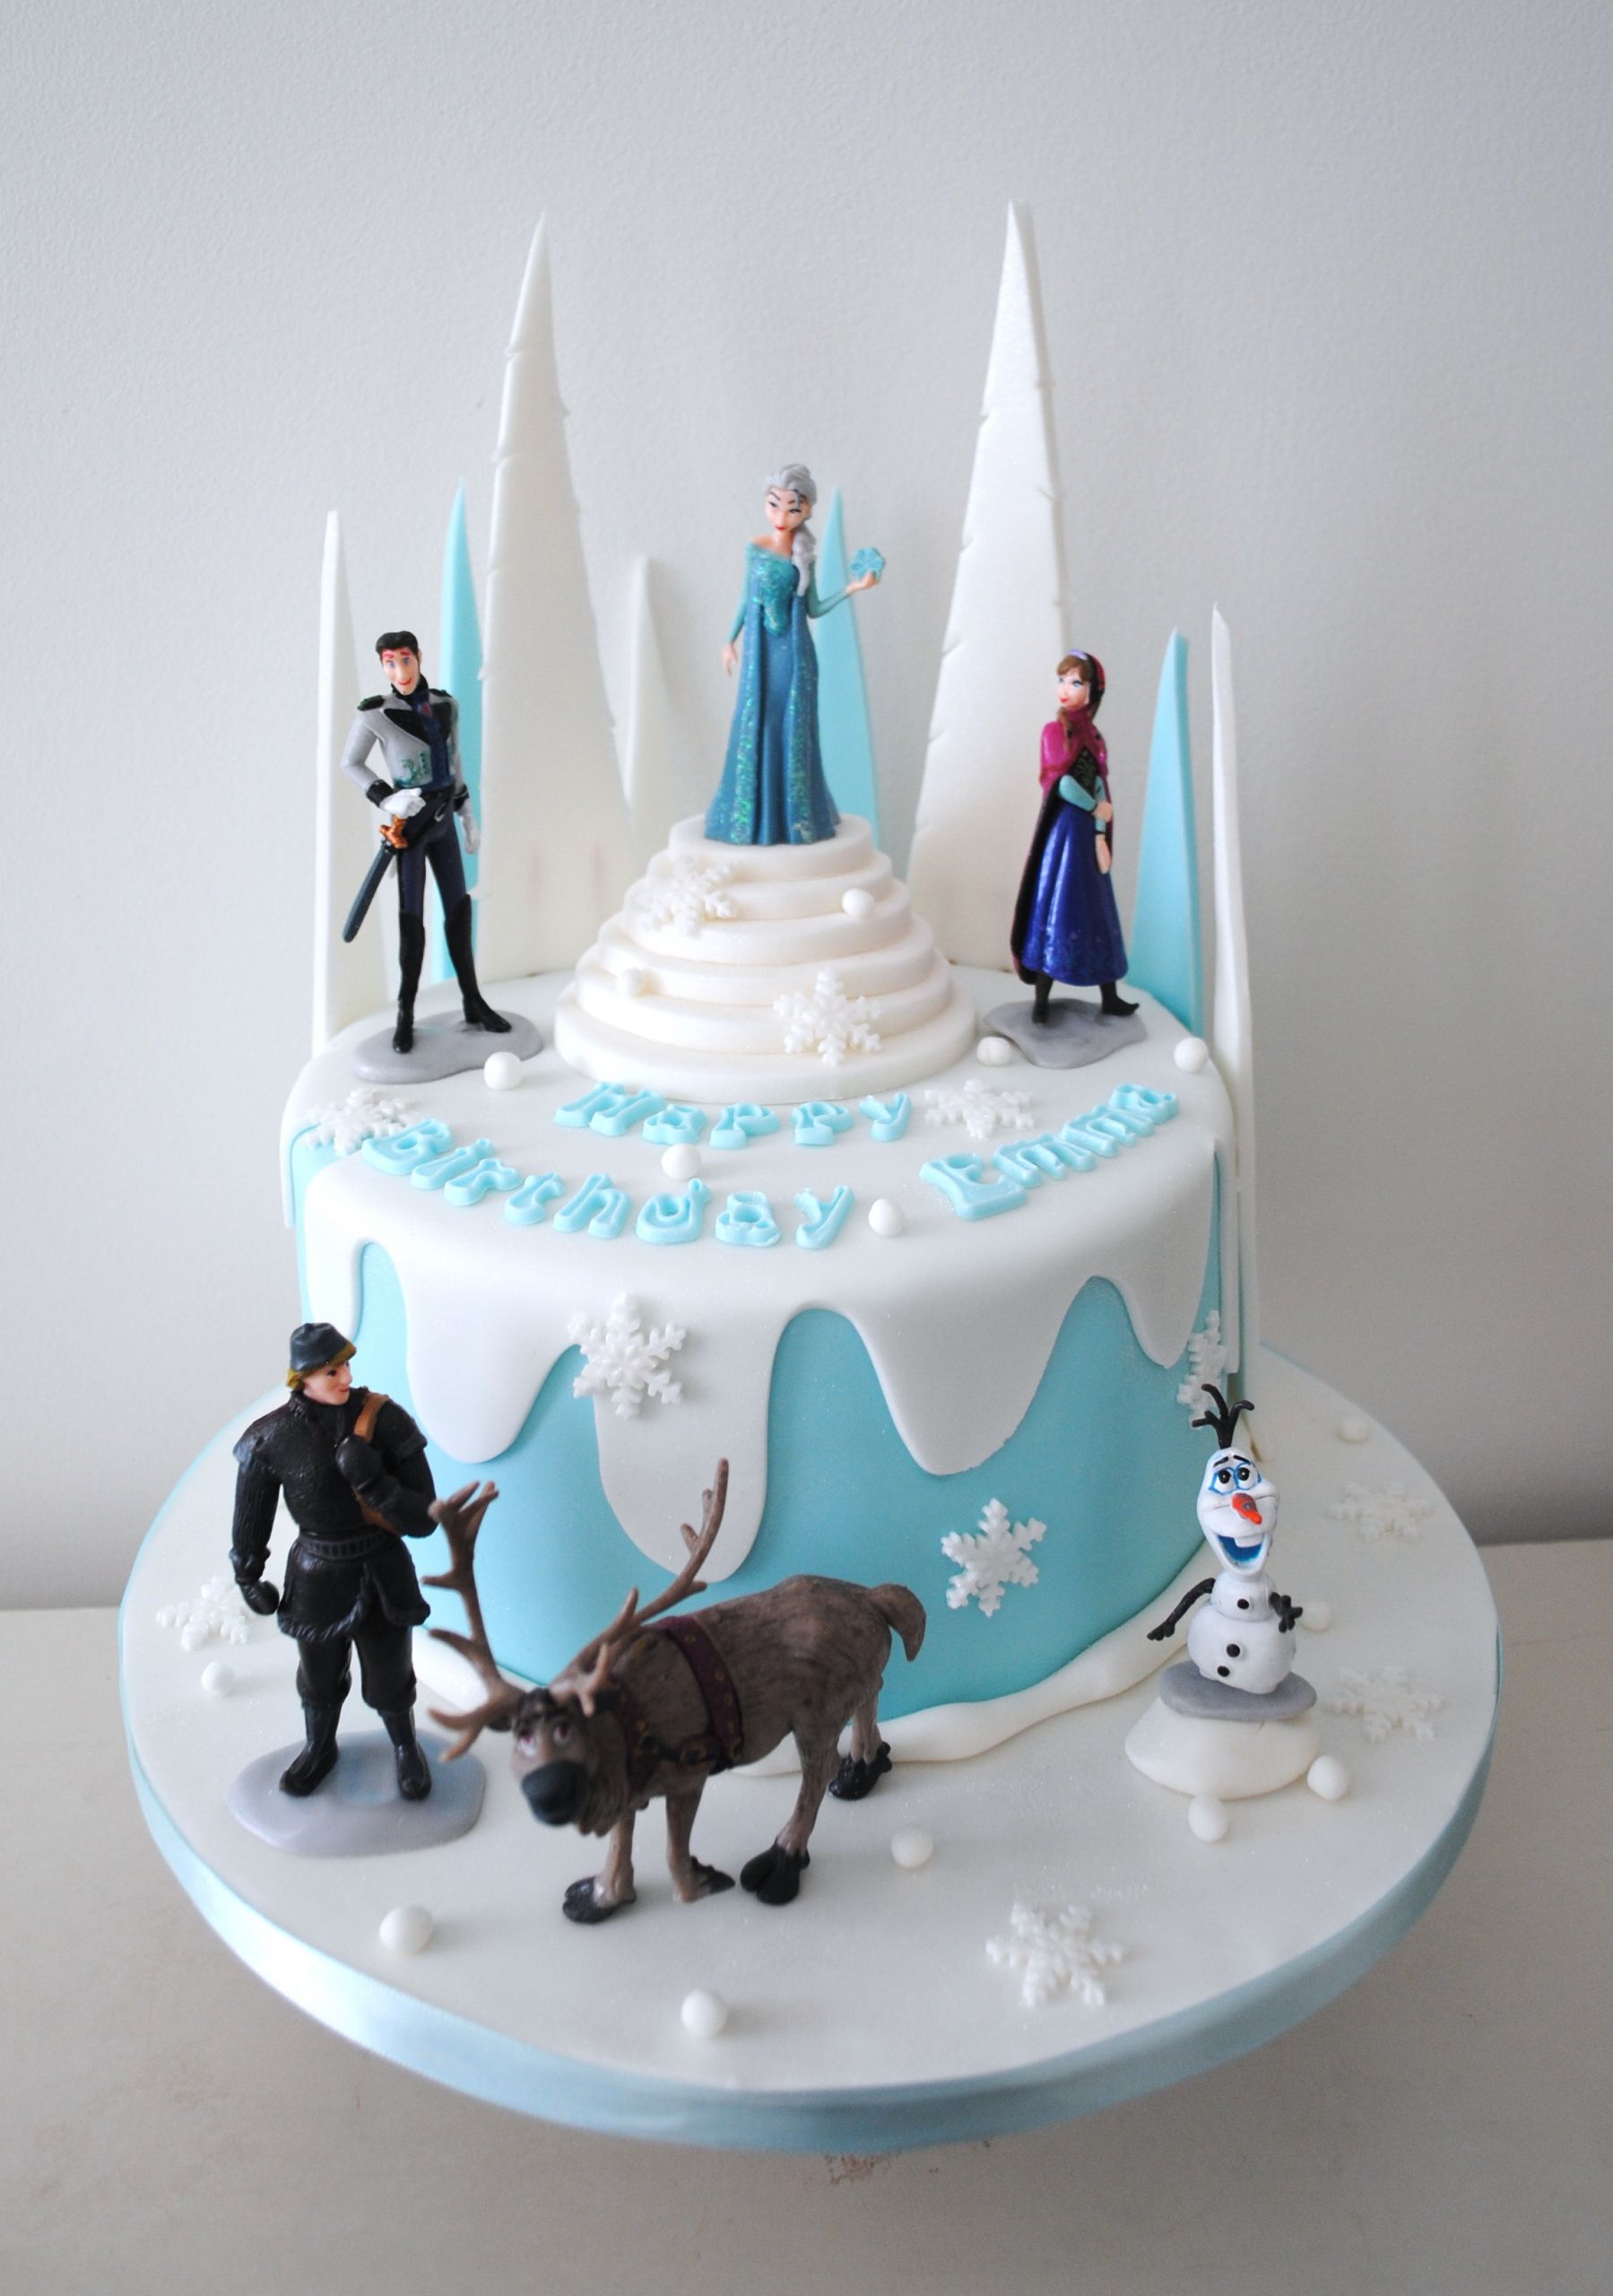 Disney Frozen Birthday Cakes
 Frozen 2 Birthday Cakes London Cupcakes